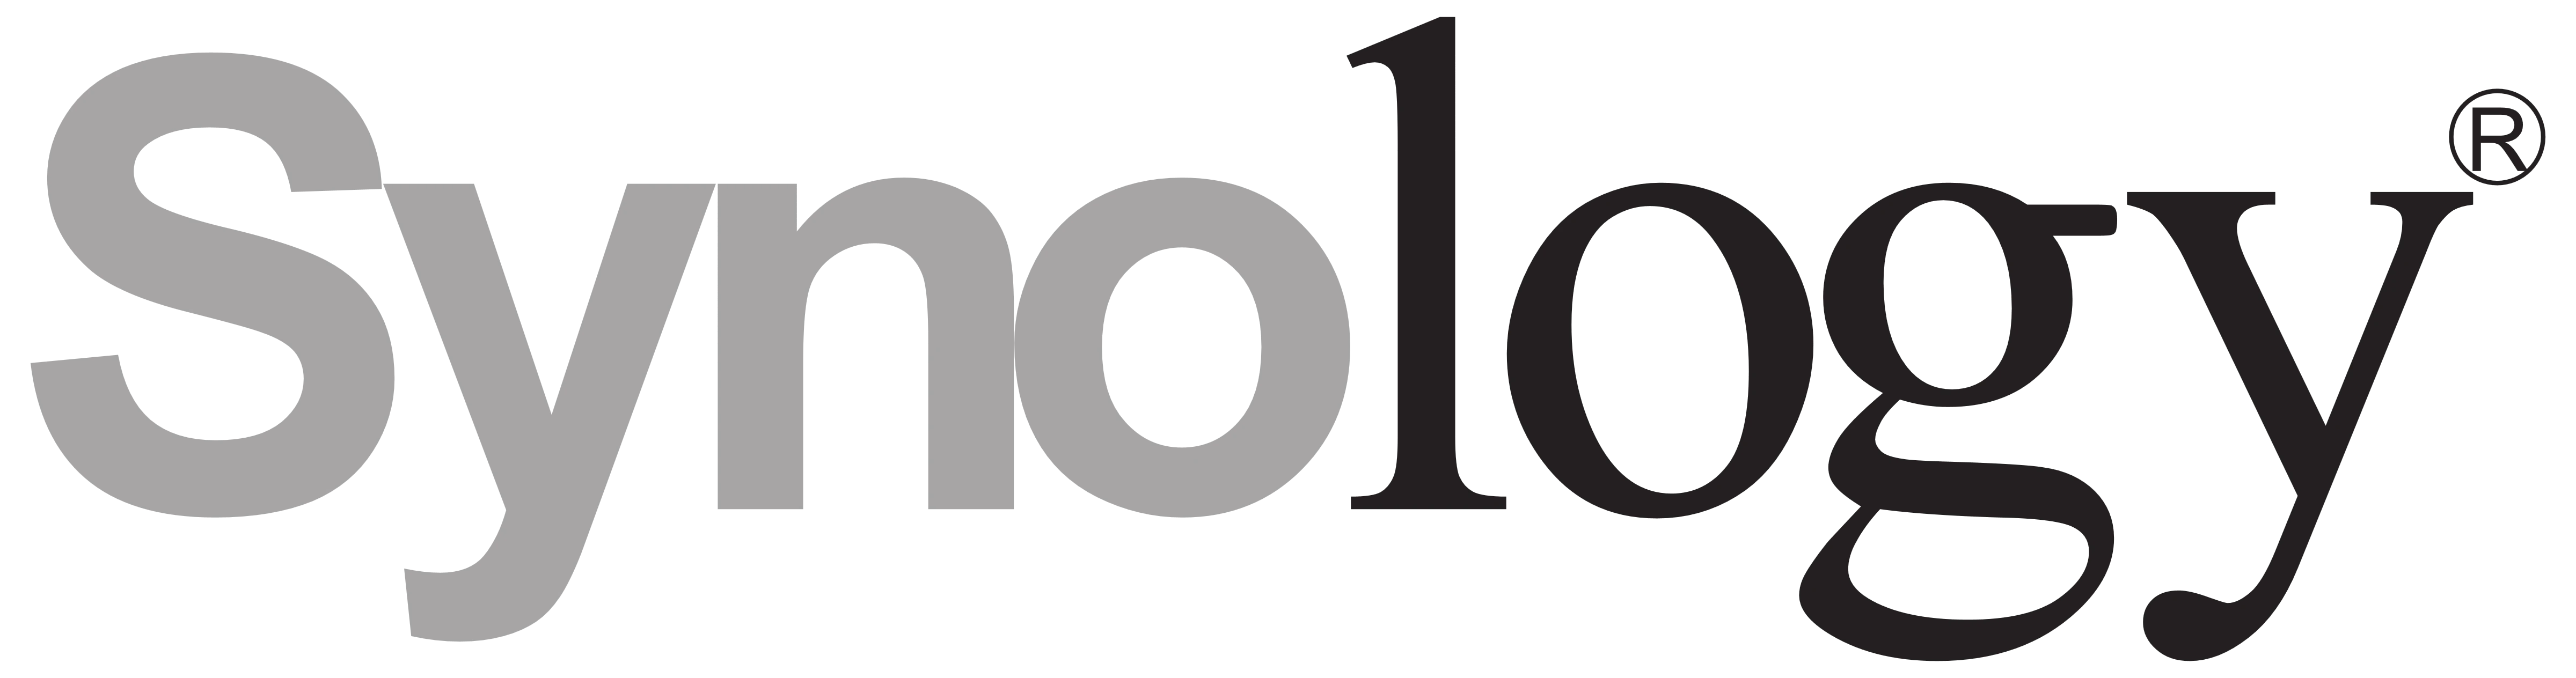 Synology Logo